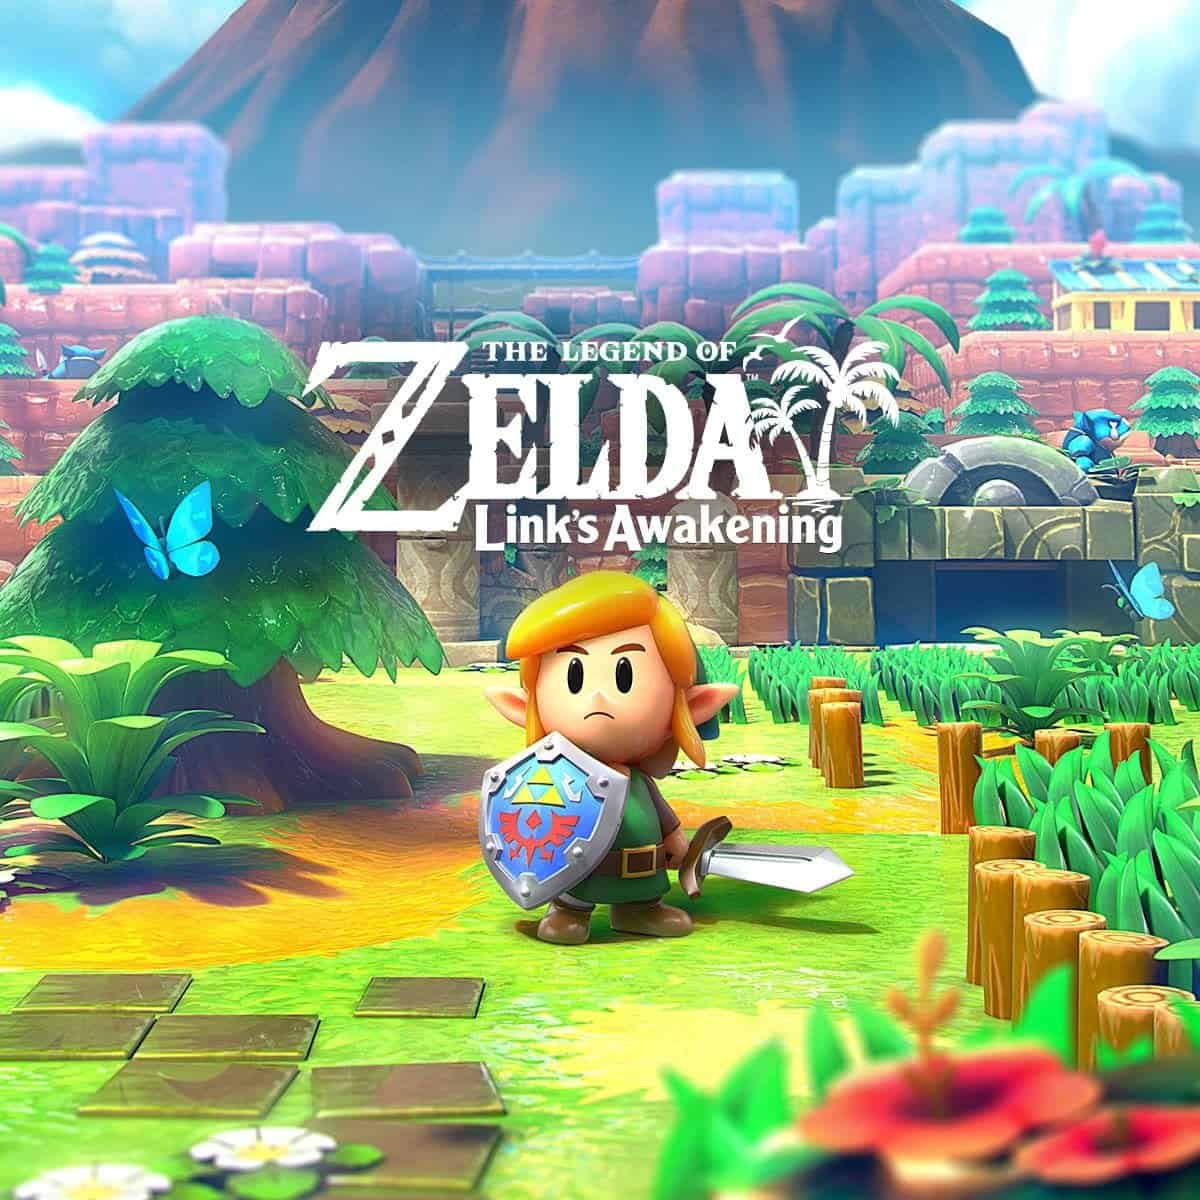 The Legend of Zelda Link’s Awakening (Switch) Review